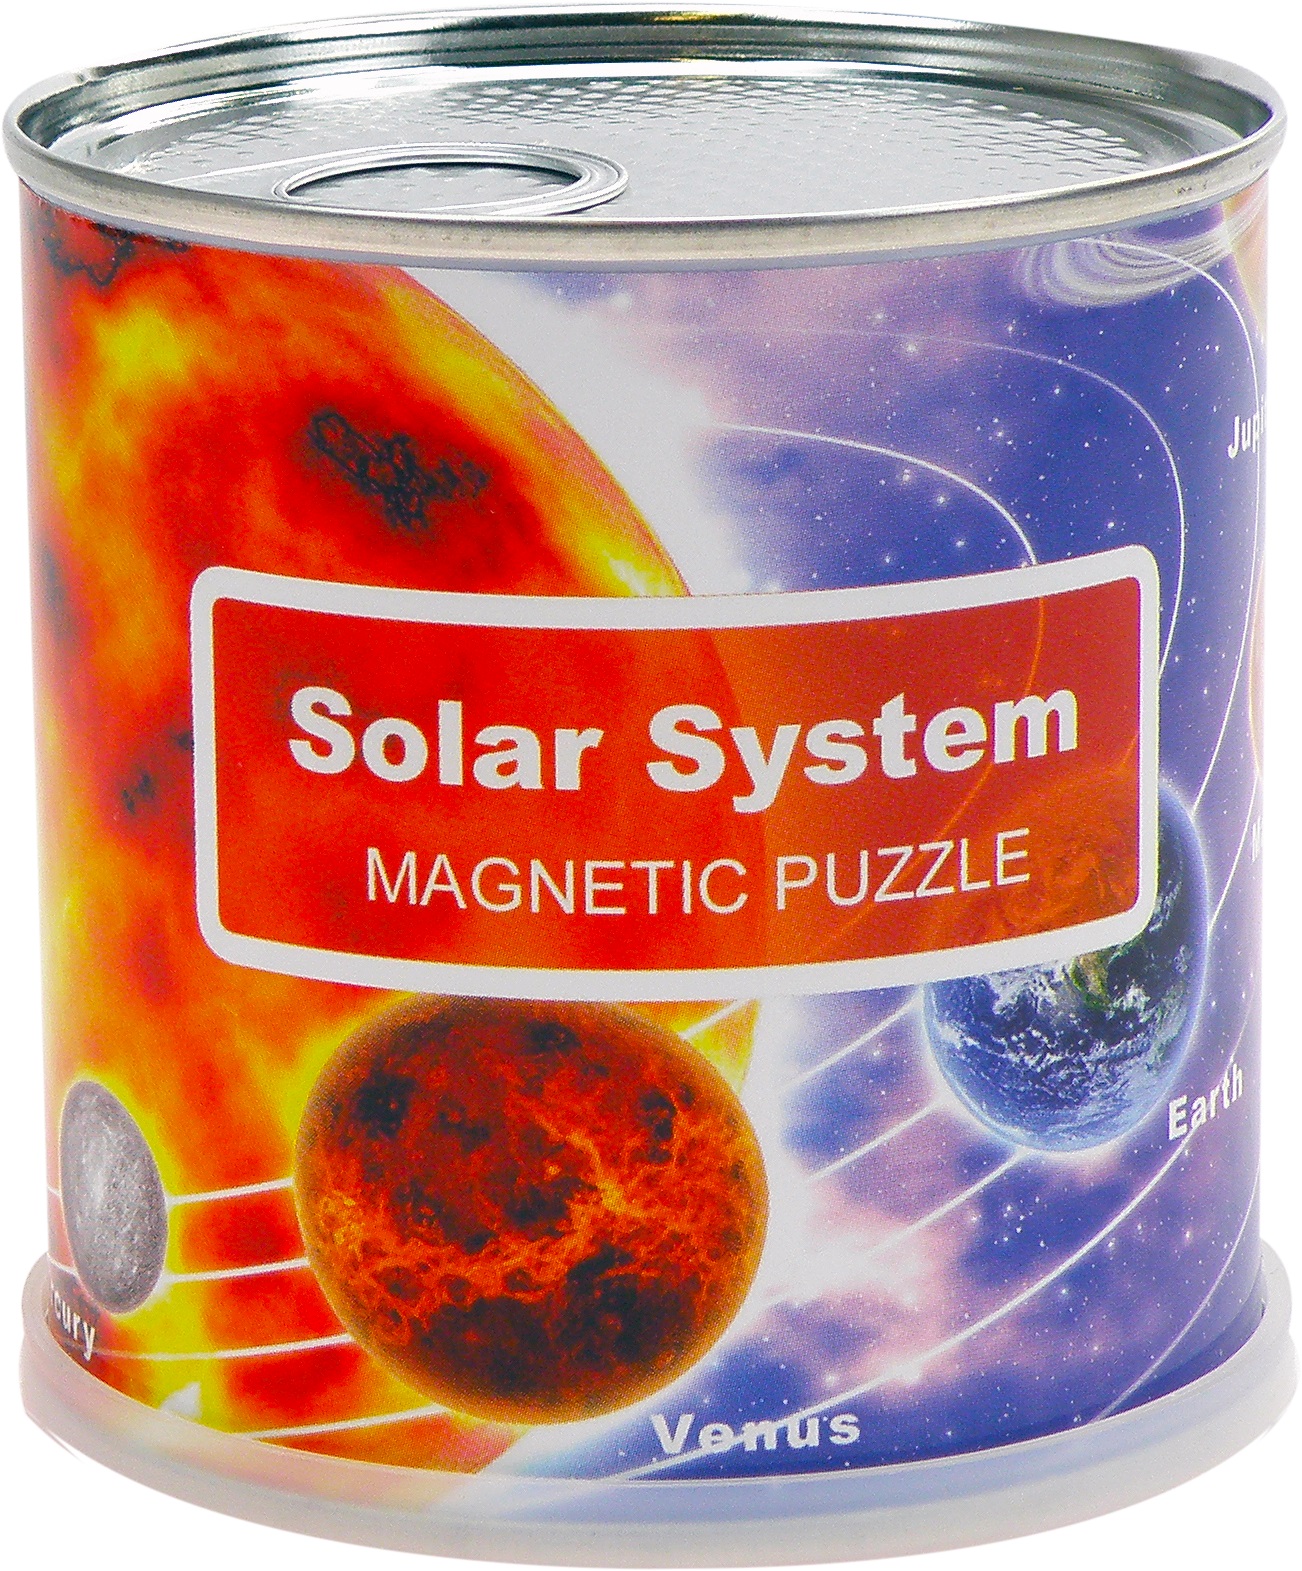 Solar System magnets